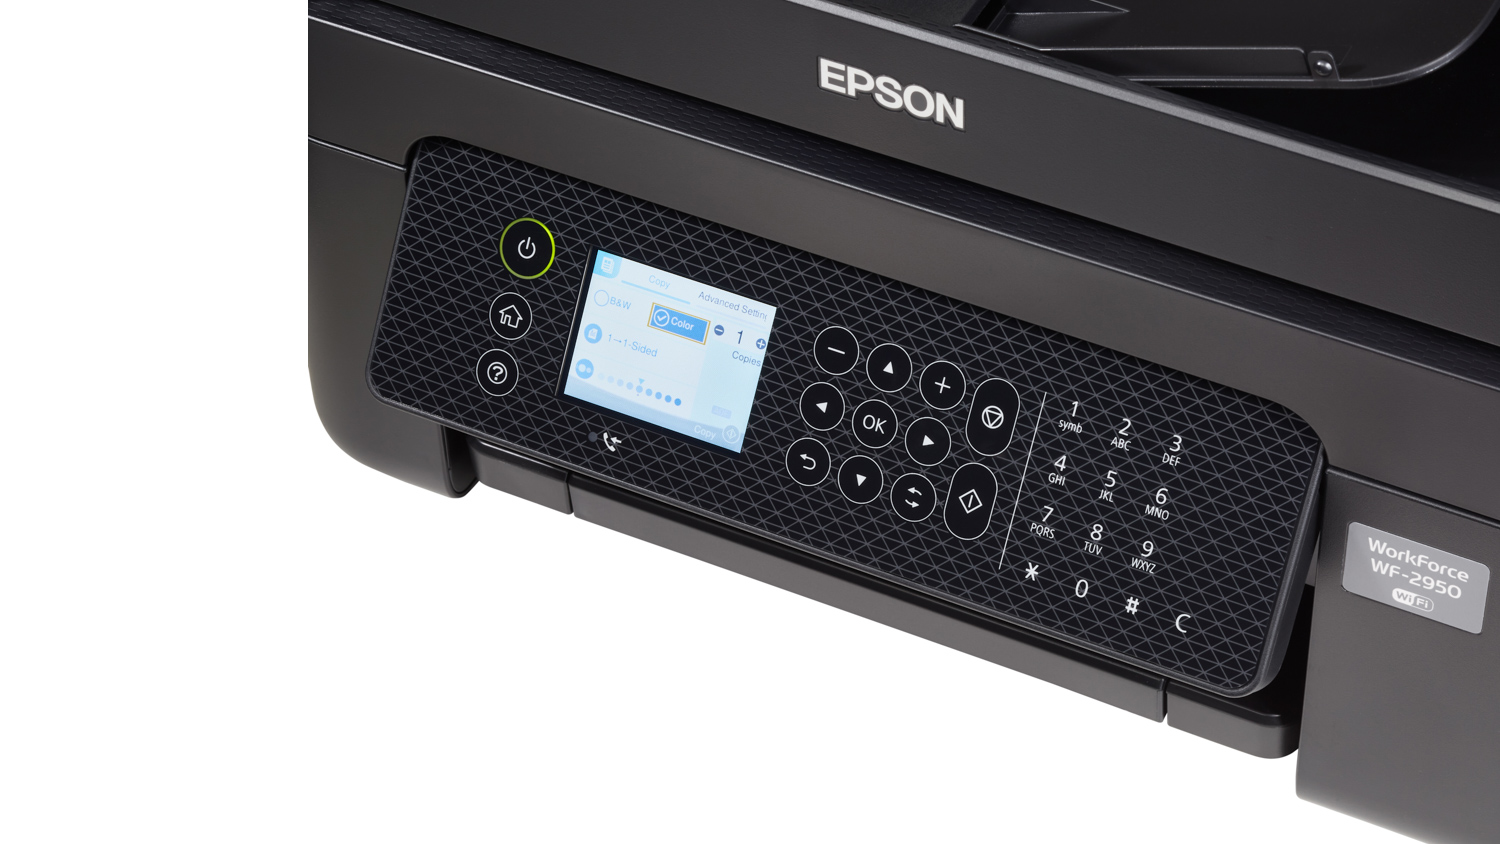 Epson Workforce Wf 2950 Review Printer Choice 9251